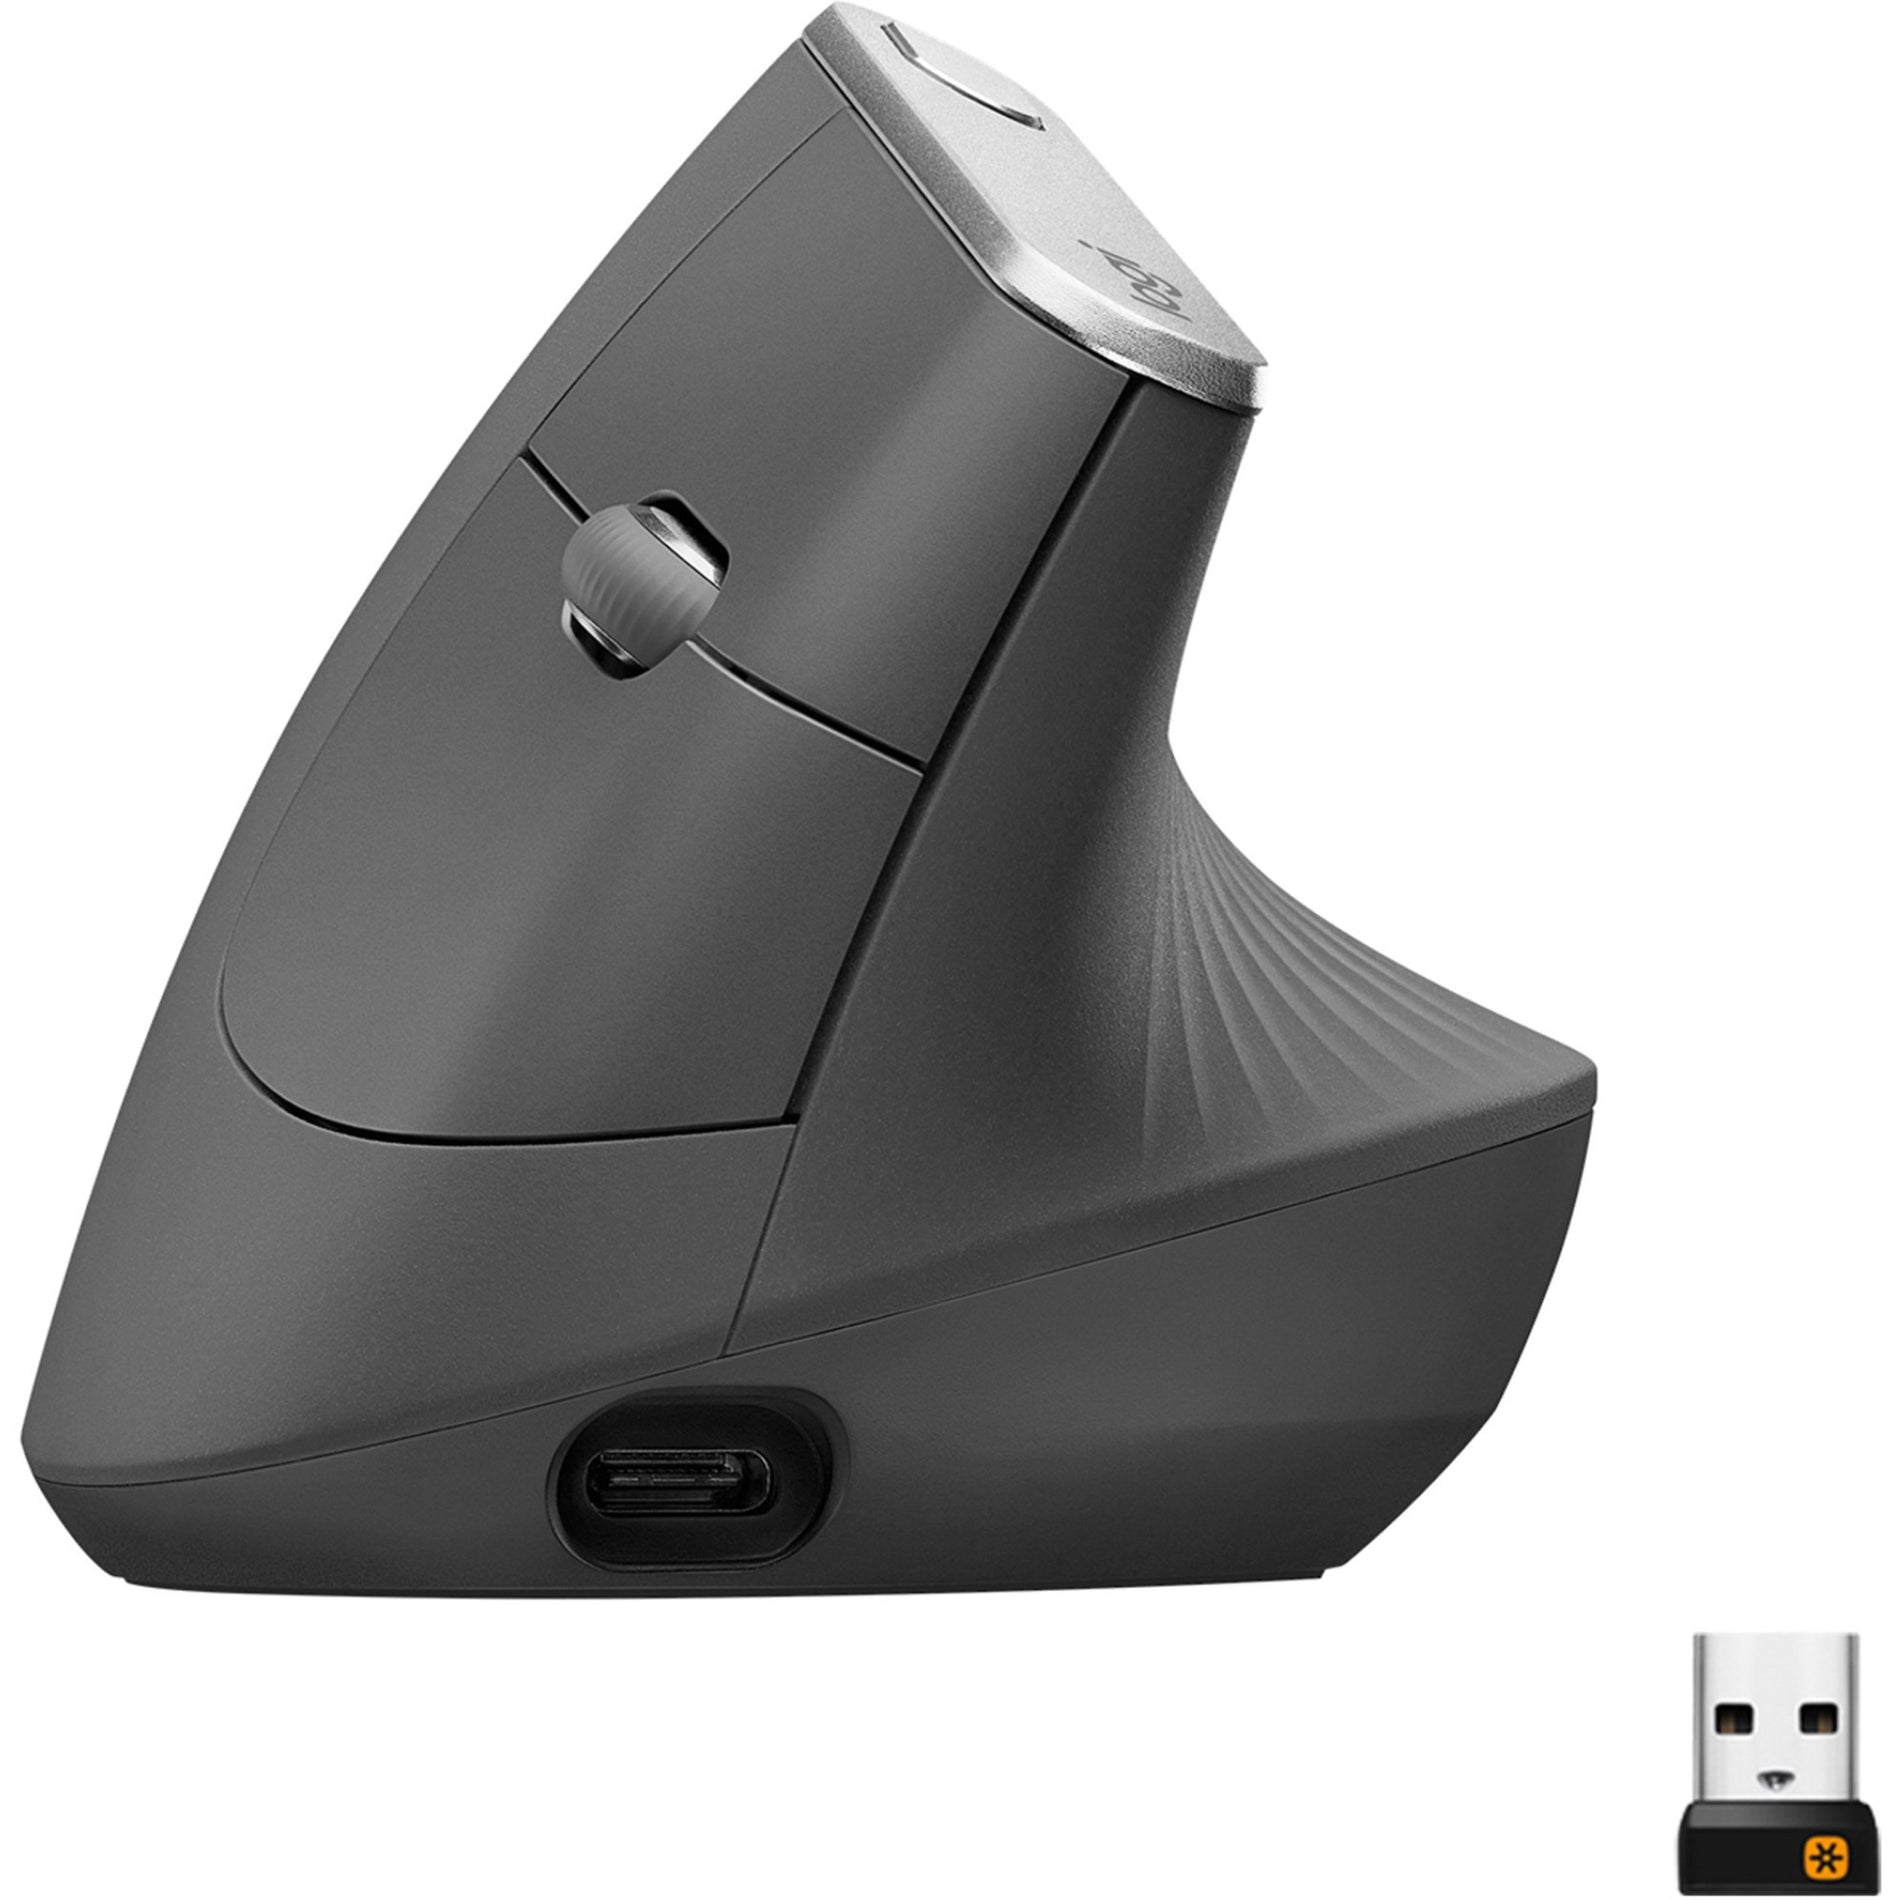 Logitech 910-005447 MX Vertical Advanced Ergonomic Mouse, Bluetooth/Radio Frequency, 4000 dpi, Graphite